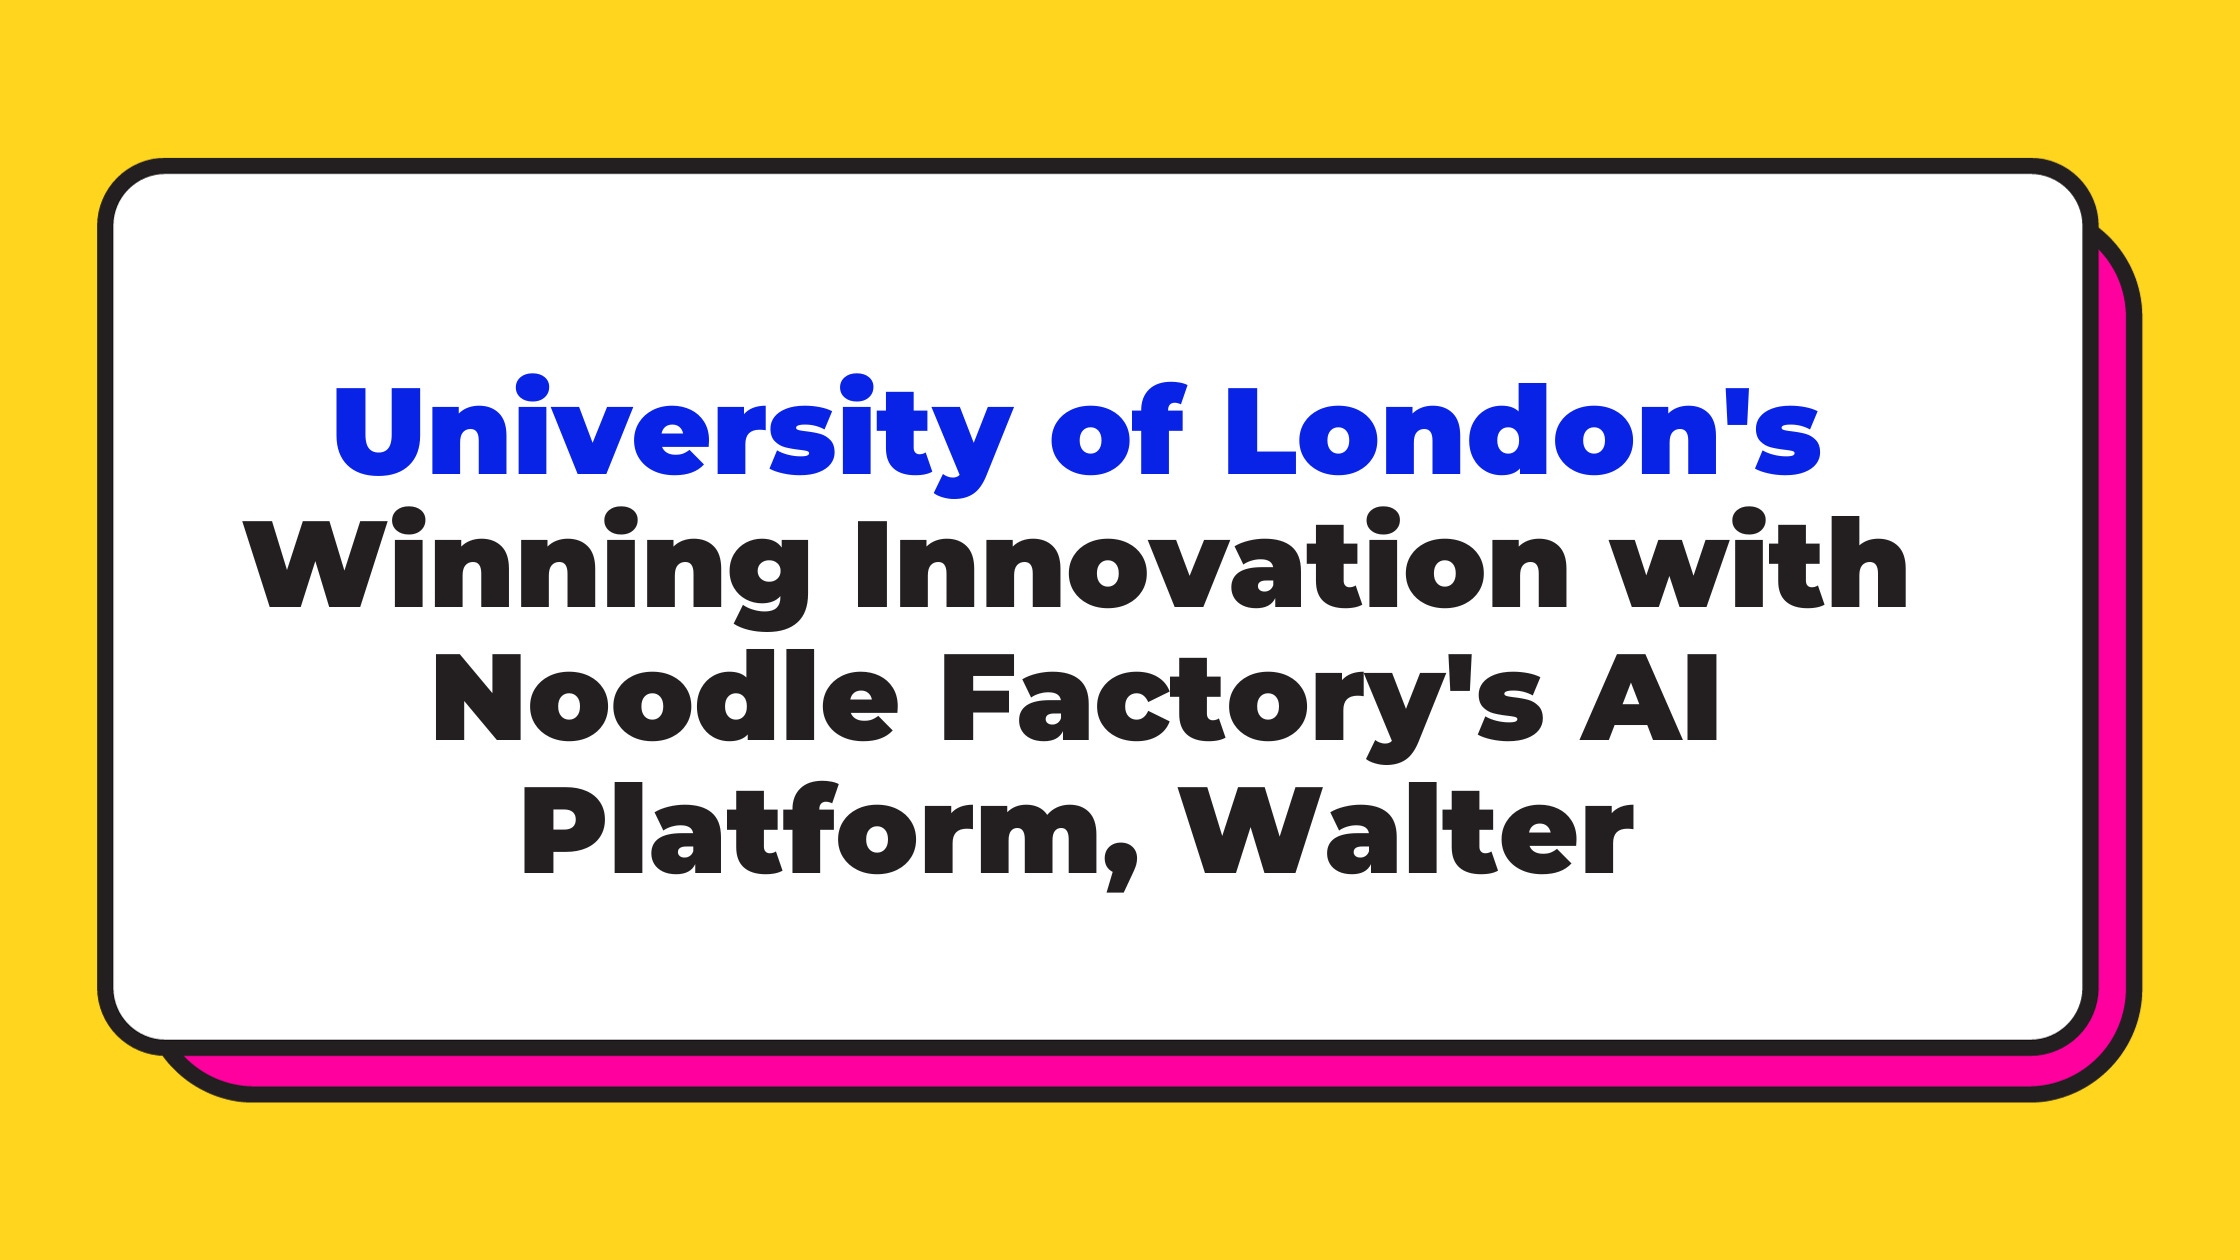 University of London's Winning Innovation with Noodle Factory's AI Platform, Walter